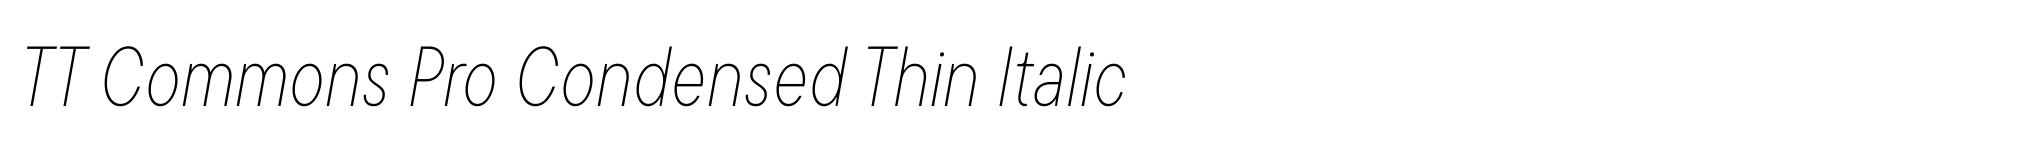 TT Commons Pro Condensed Thin Italic image